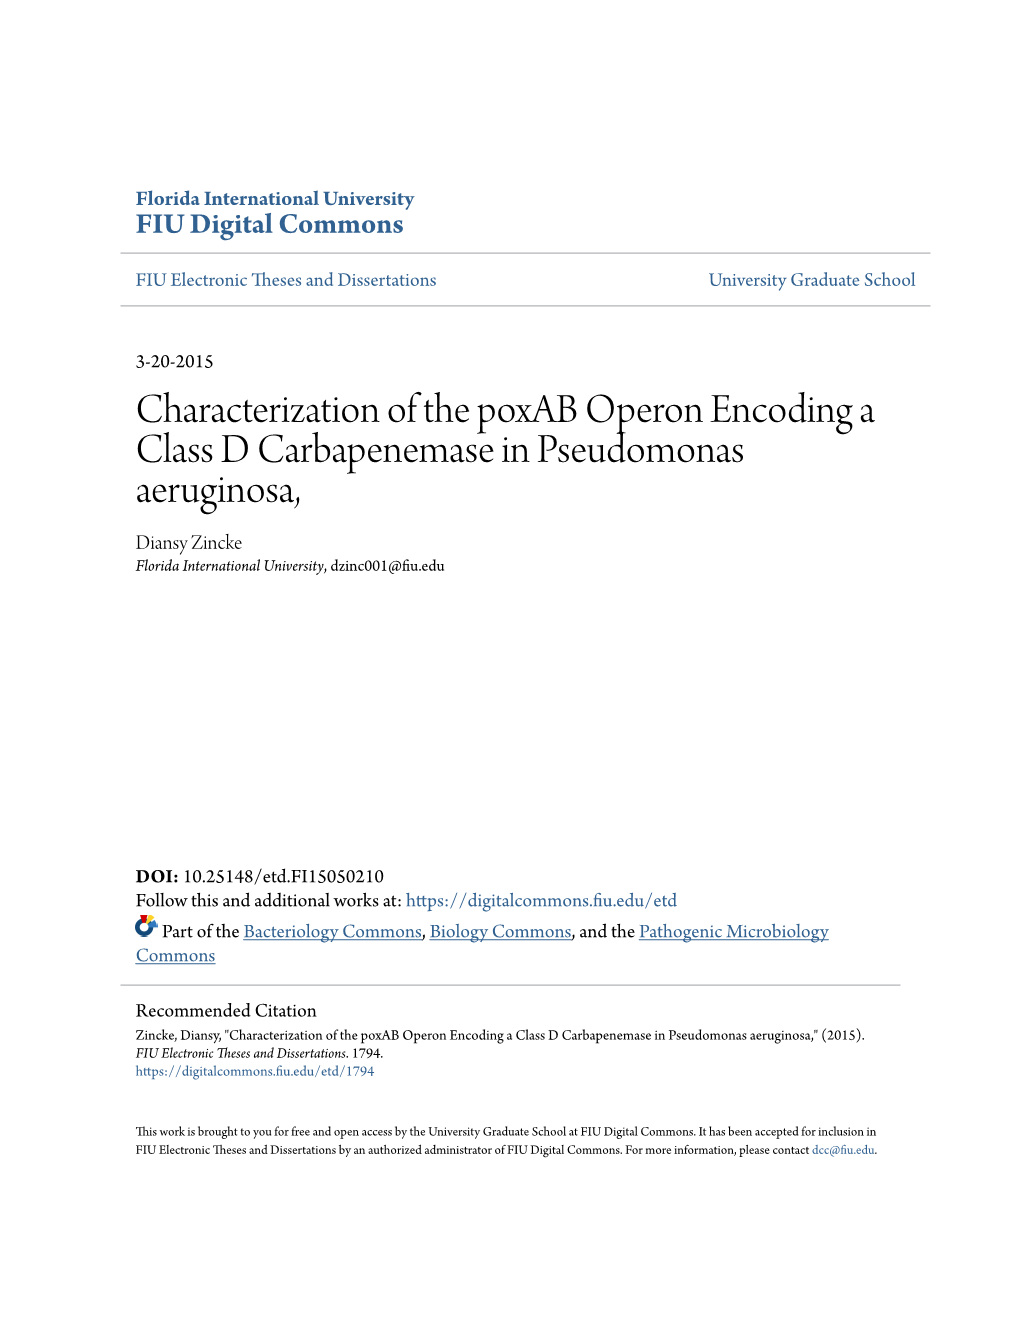 Characterization of the Poxab Operon Encoding a Class D Carbapenemase in Pseudomonas Aeruginosa, Diansy Zincke Florida International University, Dzinc001@Fiu.Edu